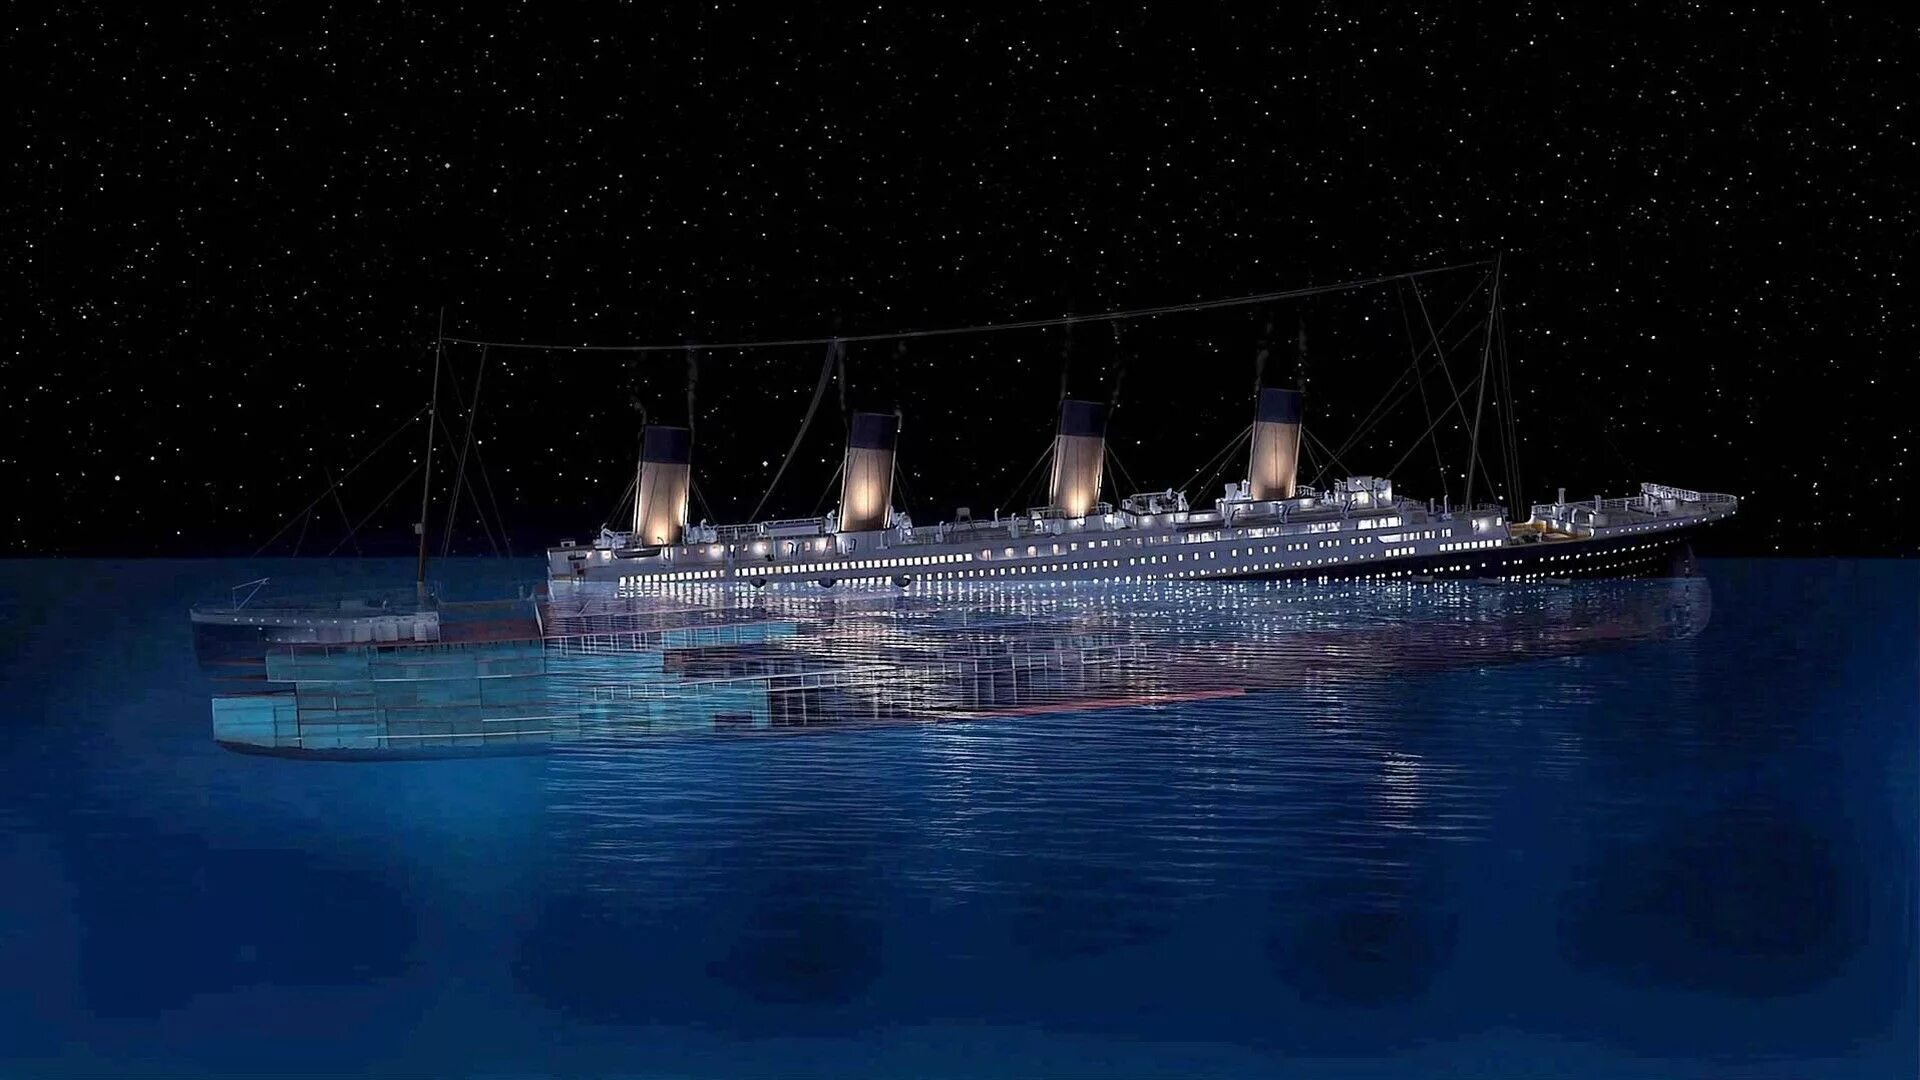 Затонувший Титаник 2020. Затонувшие корабли Титаник. Титаник корабль. Крушение ”Титаника” в Атлантическом океане. Титаник утонул дата